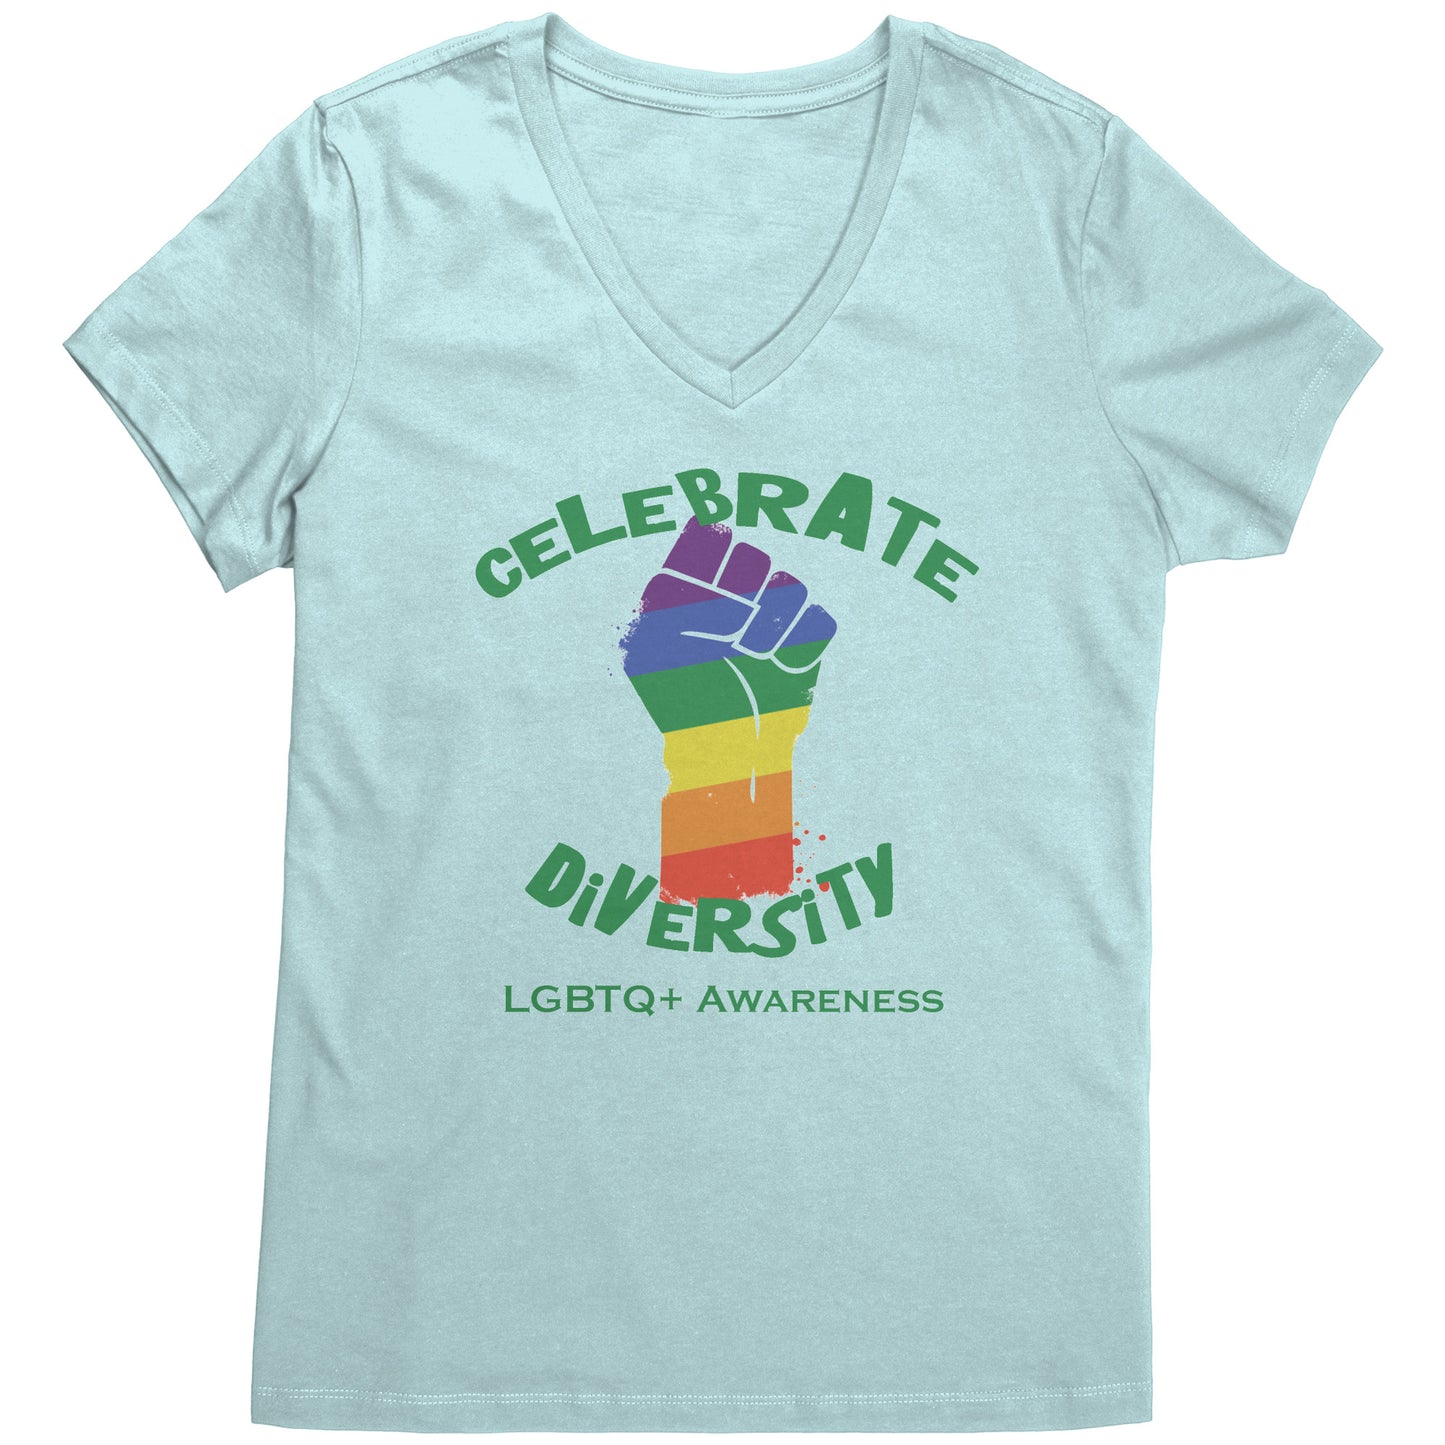 Celebrate Diversity T-shirt, Hoodie, Tank